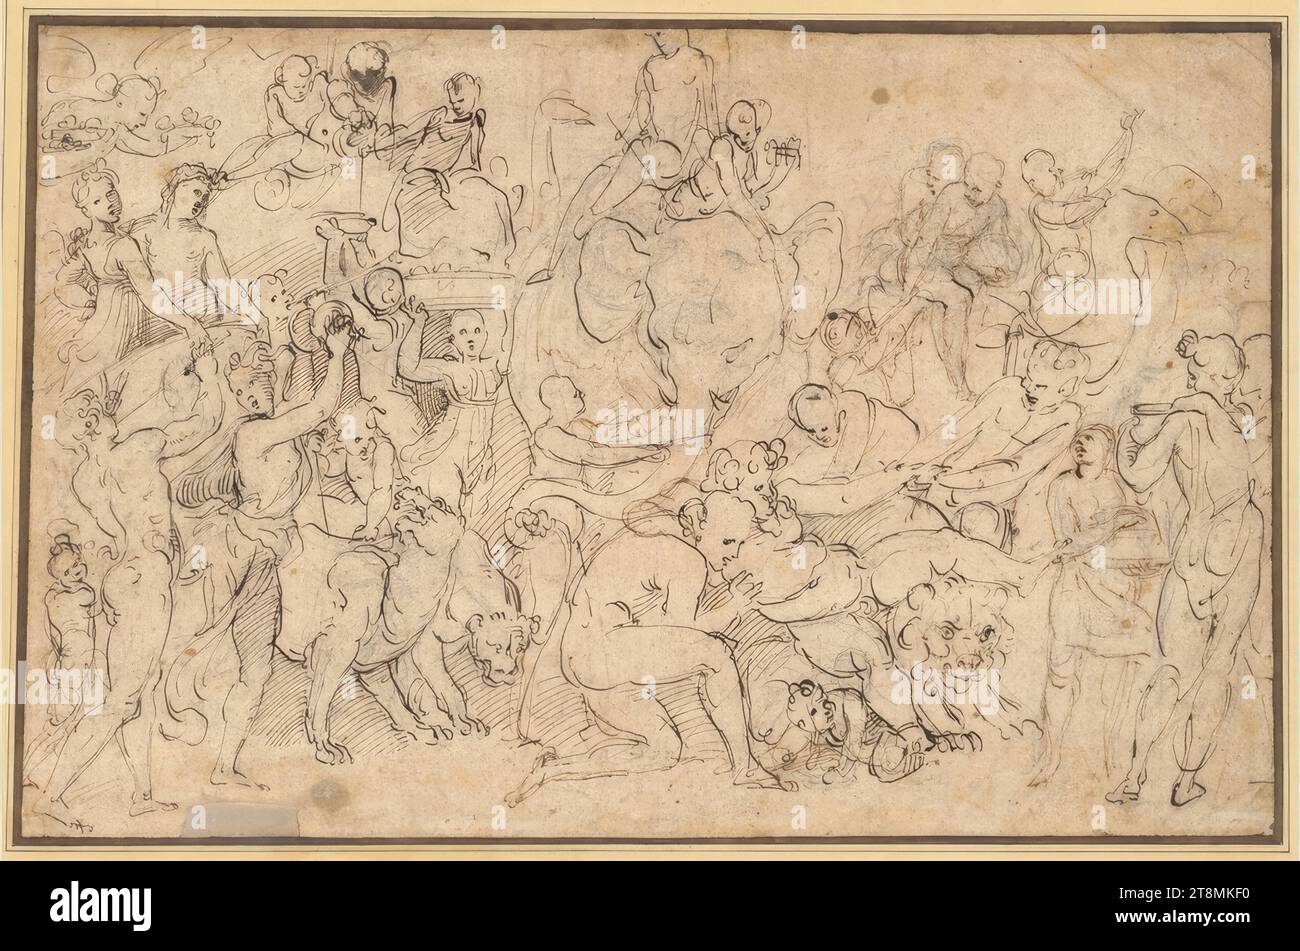 The Triumph of Bacchus in India, Raffaello Santi (Urbino 1483 - 1520 Rome), 1517, drawing, pen and black over preliminary drawing in chalk; piece of paper attached lower left, 26.2 x 40.7 cm, l.l. Duke Albert of Saxe-Teschen Stock Photo